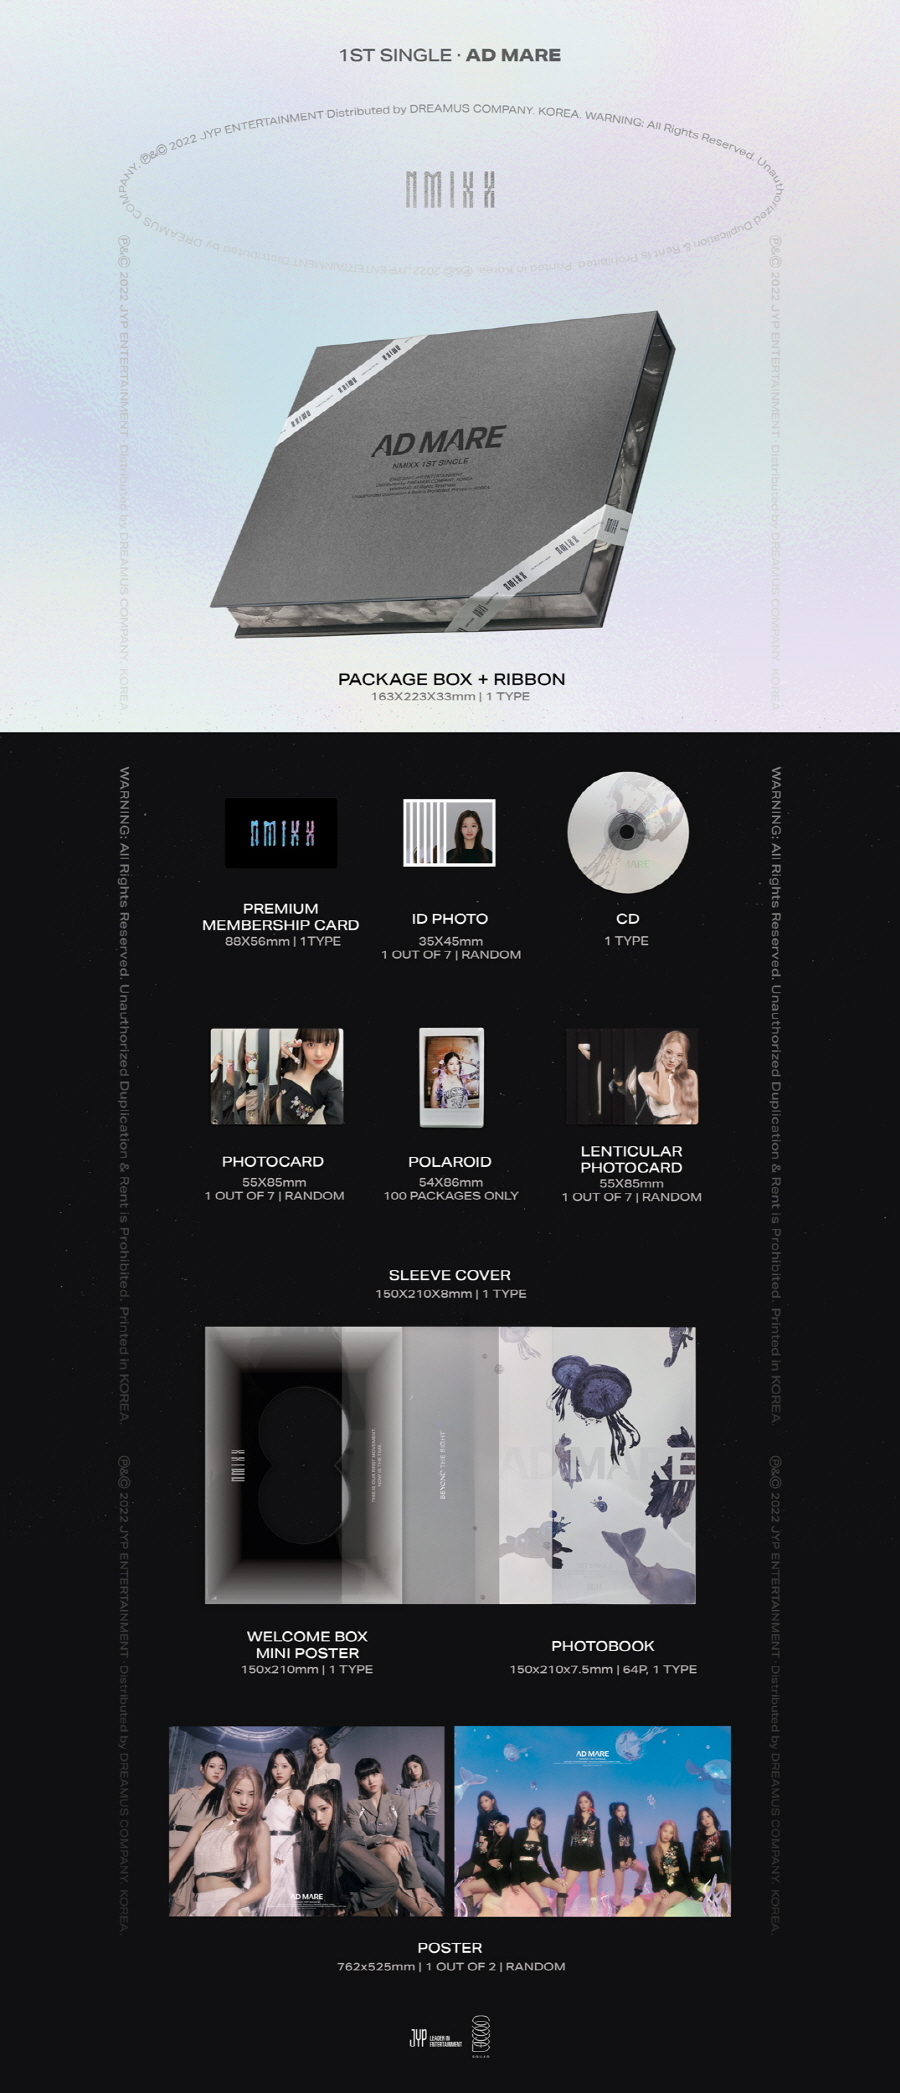 NMIXX - 1st Single Album [ AD MARE ] (Limited Edition) NMIXX NMIXXalbum NMIXXcd admare ad mare album cd poster Photobook NMIXX JYP JYPn